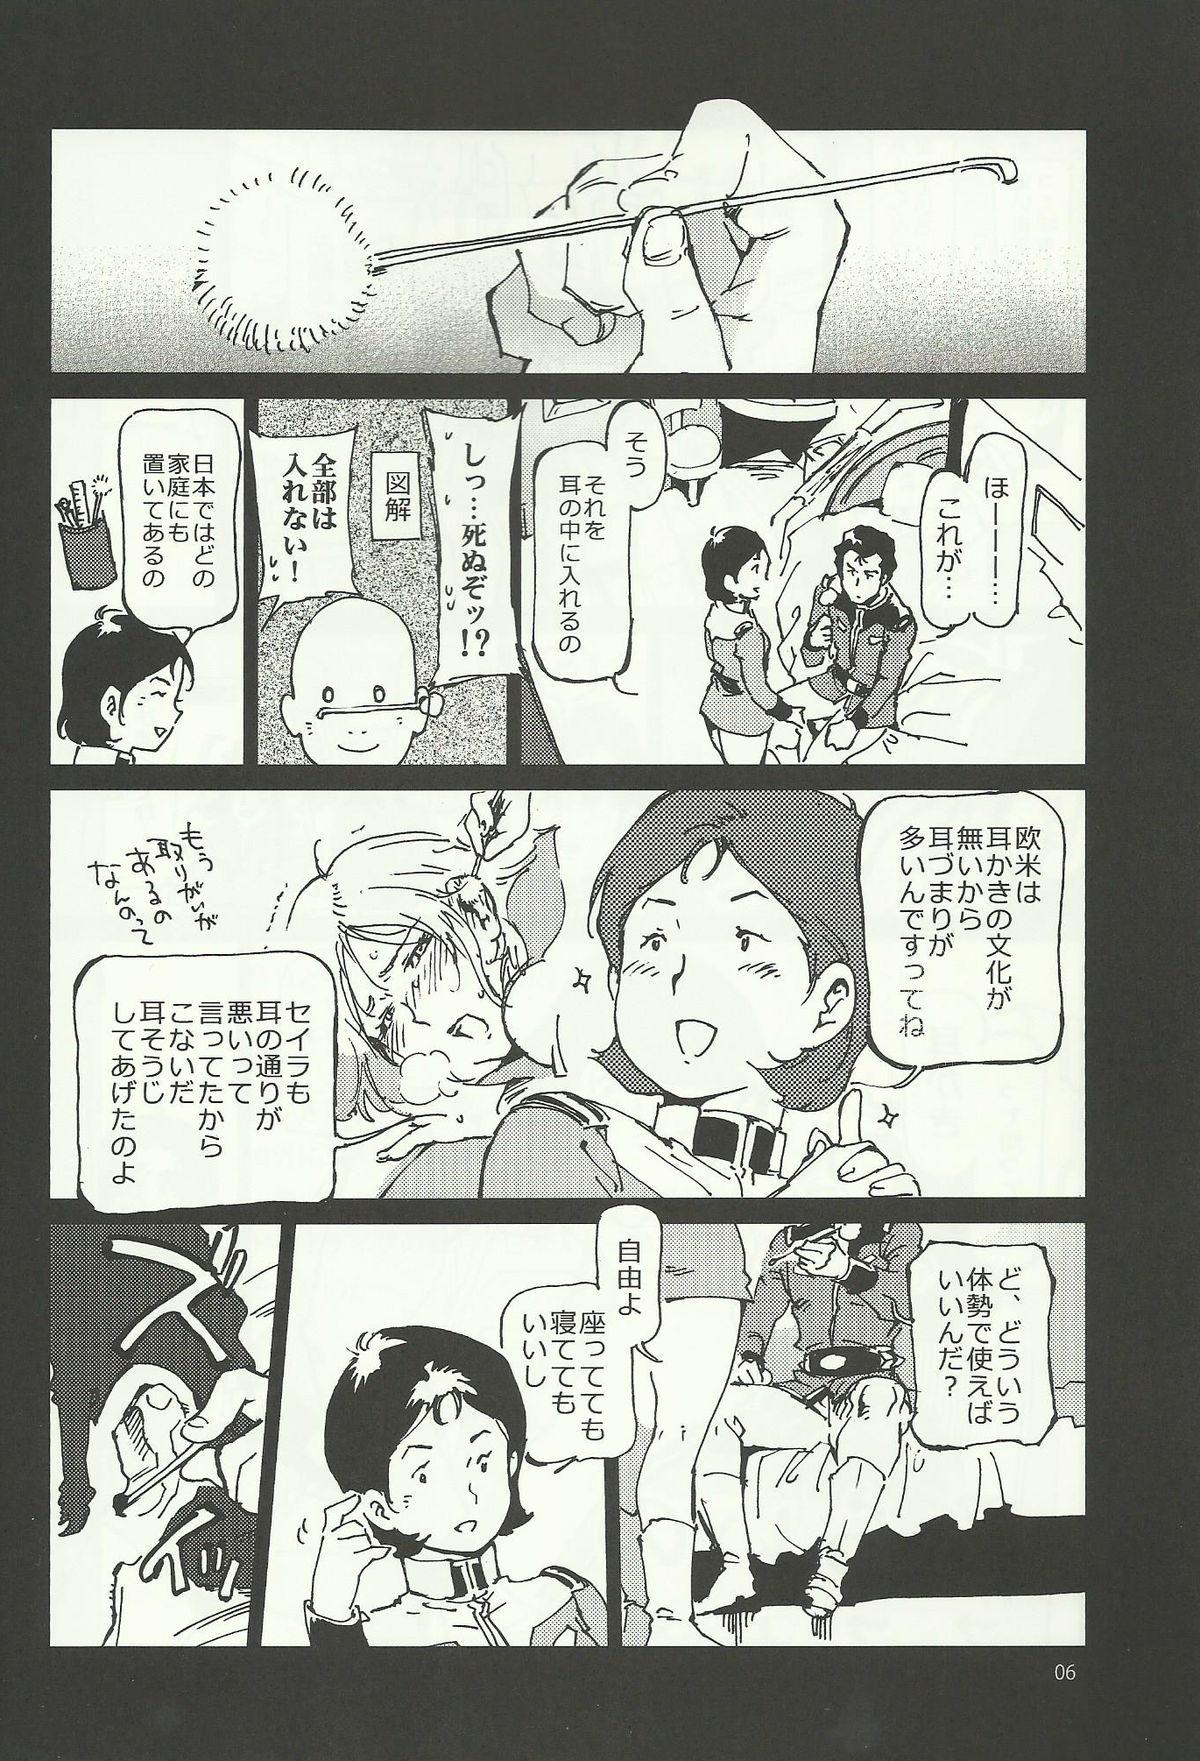 Peluda Mirai no Mimikaki - Mobile suit gundam Gaypawn - Page 5